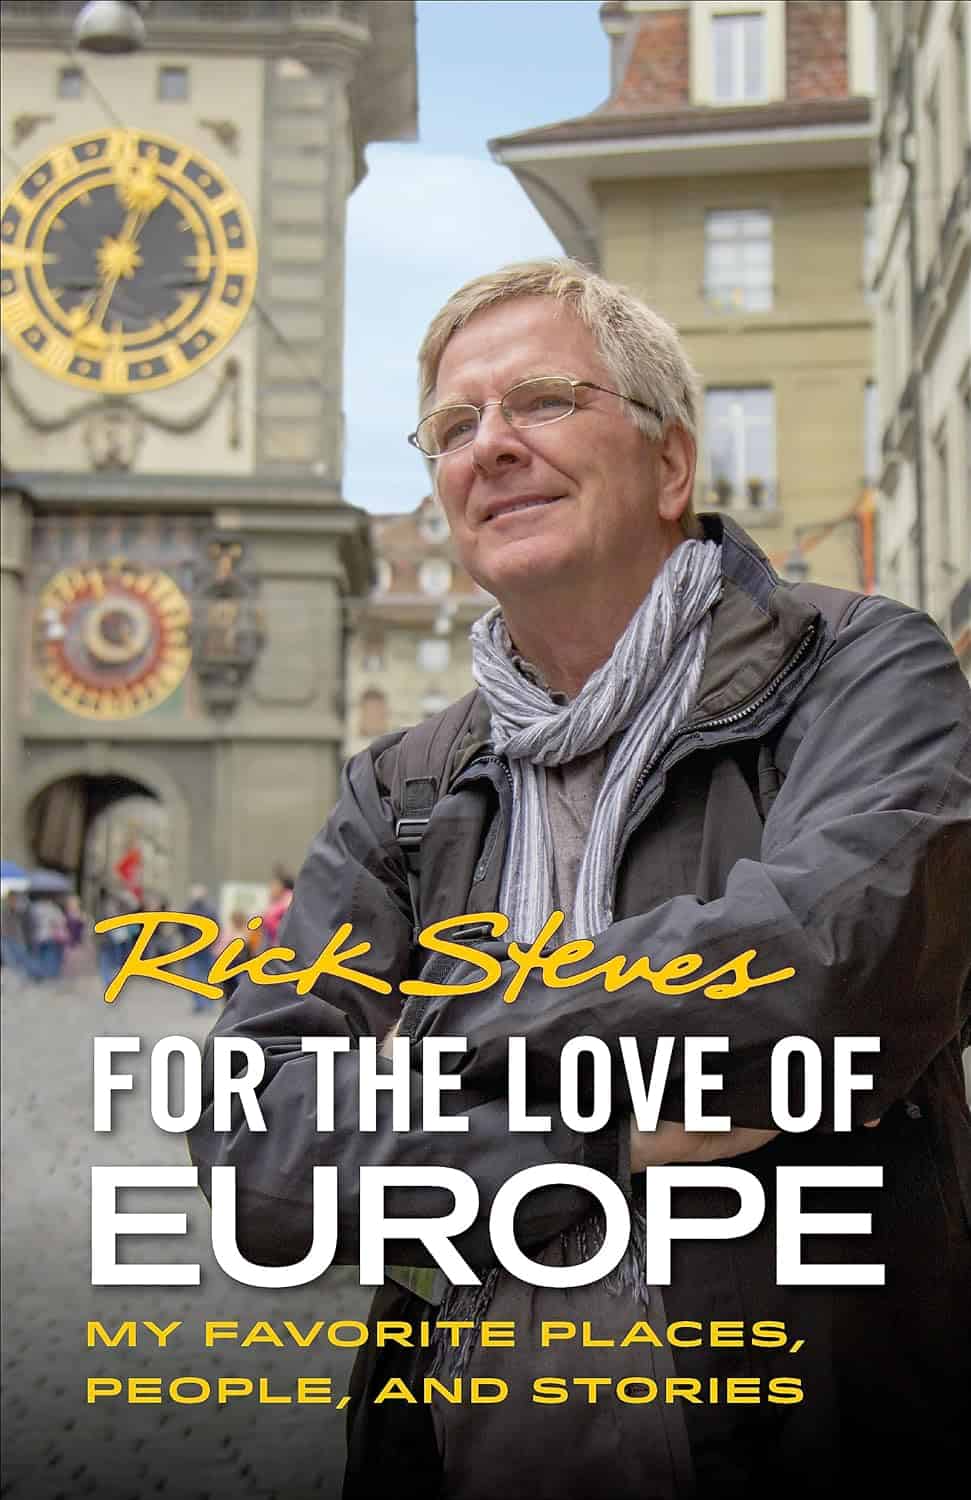 Rick Steves, "For the Love of Europe"